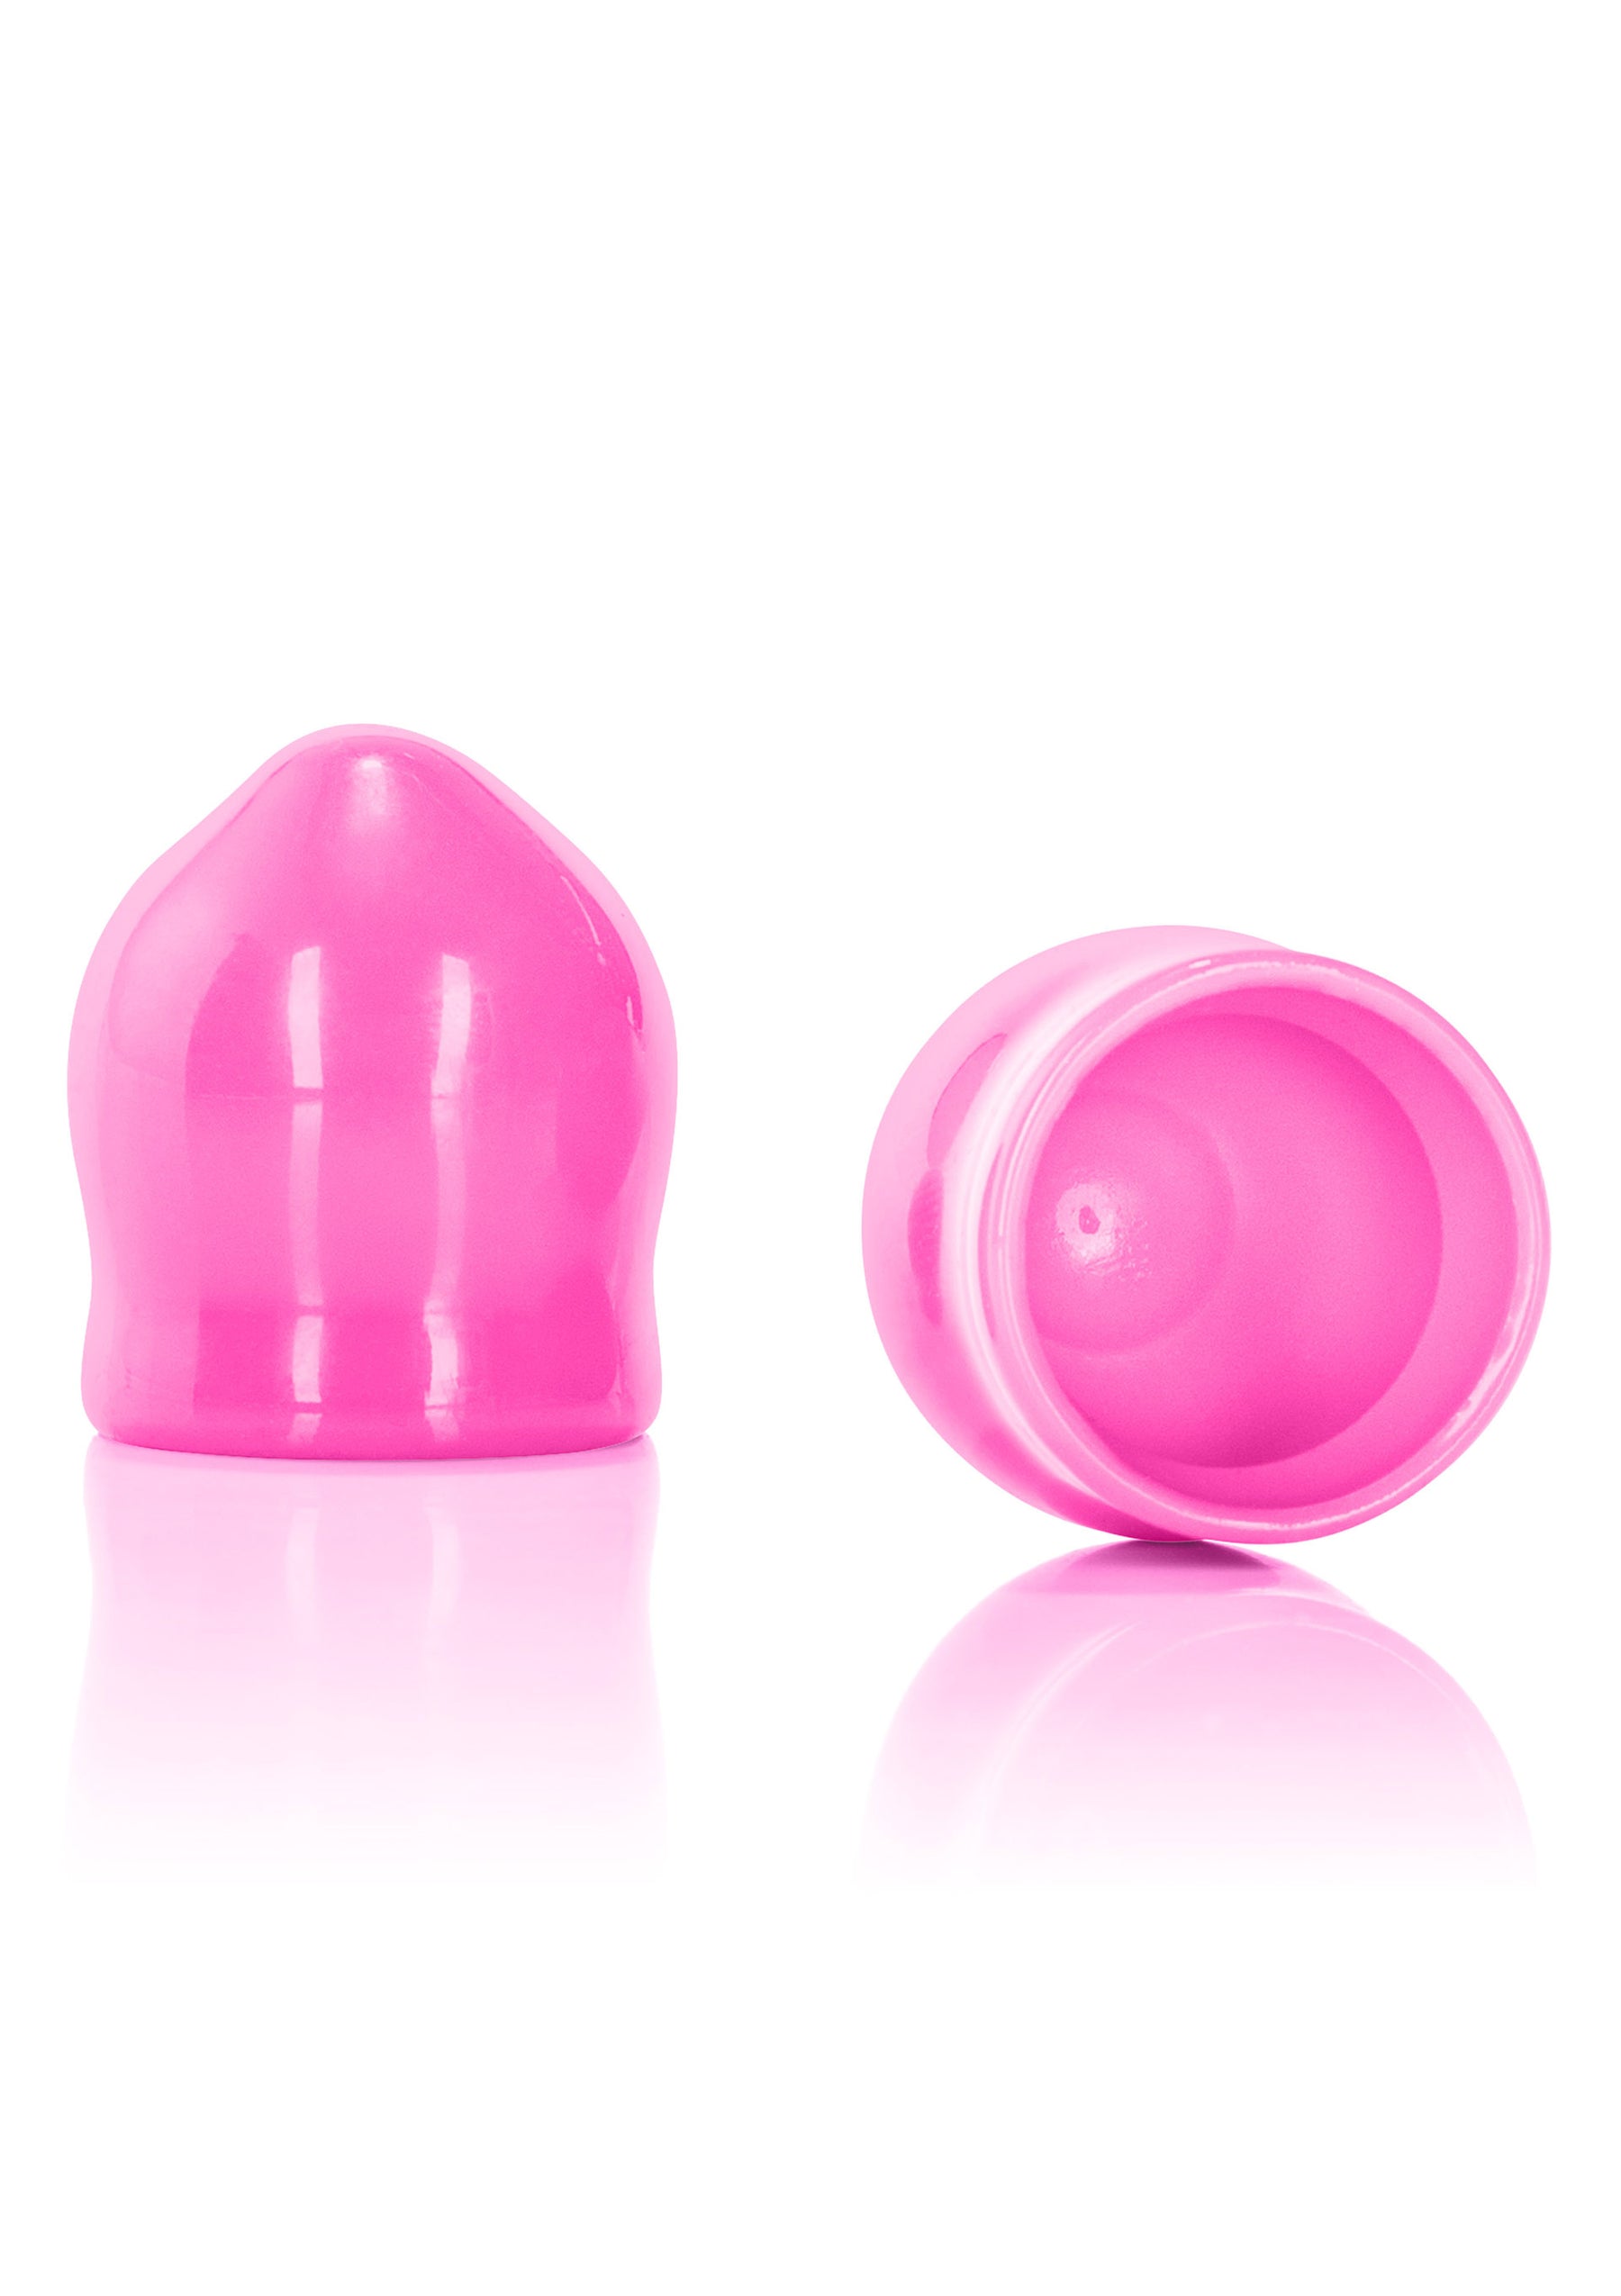 Mini Nipple Suckers-erotic-world-munchen.myshopify.com